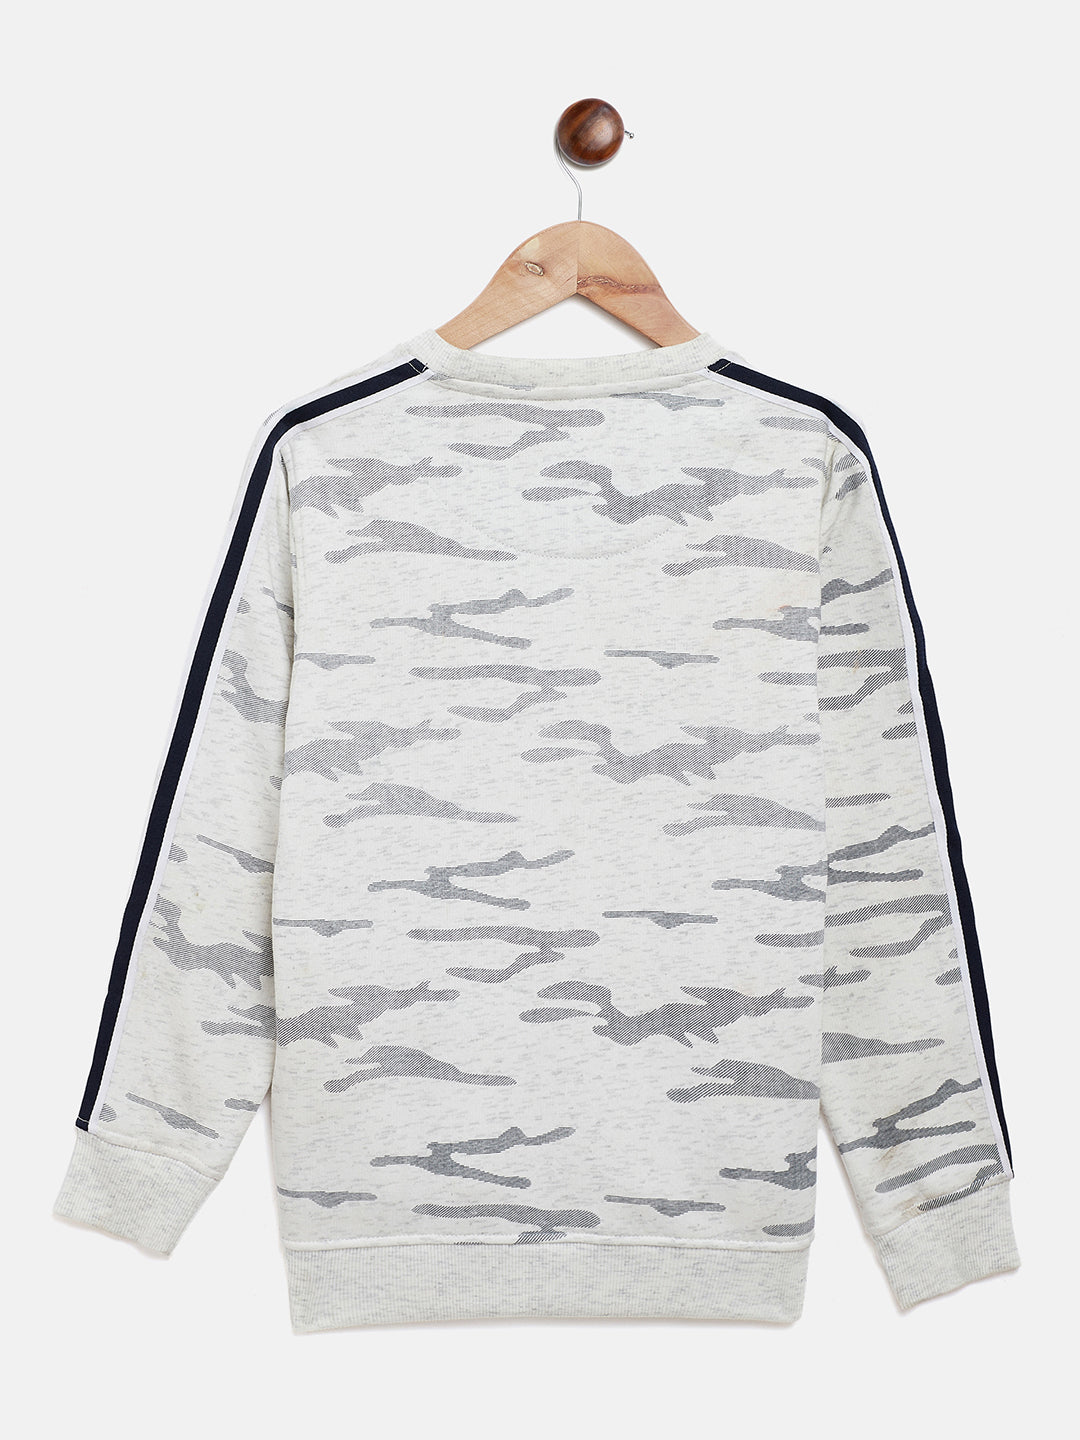 White Camouflage Sweatshirt - Boys Sweatshirts